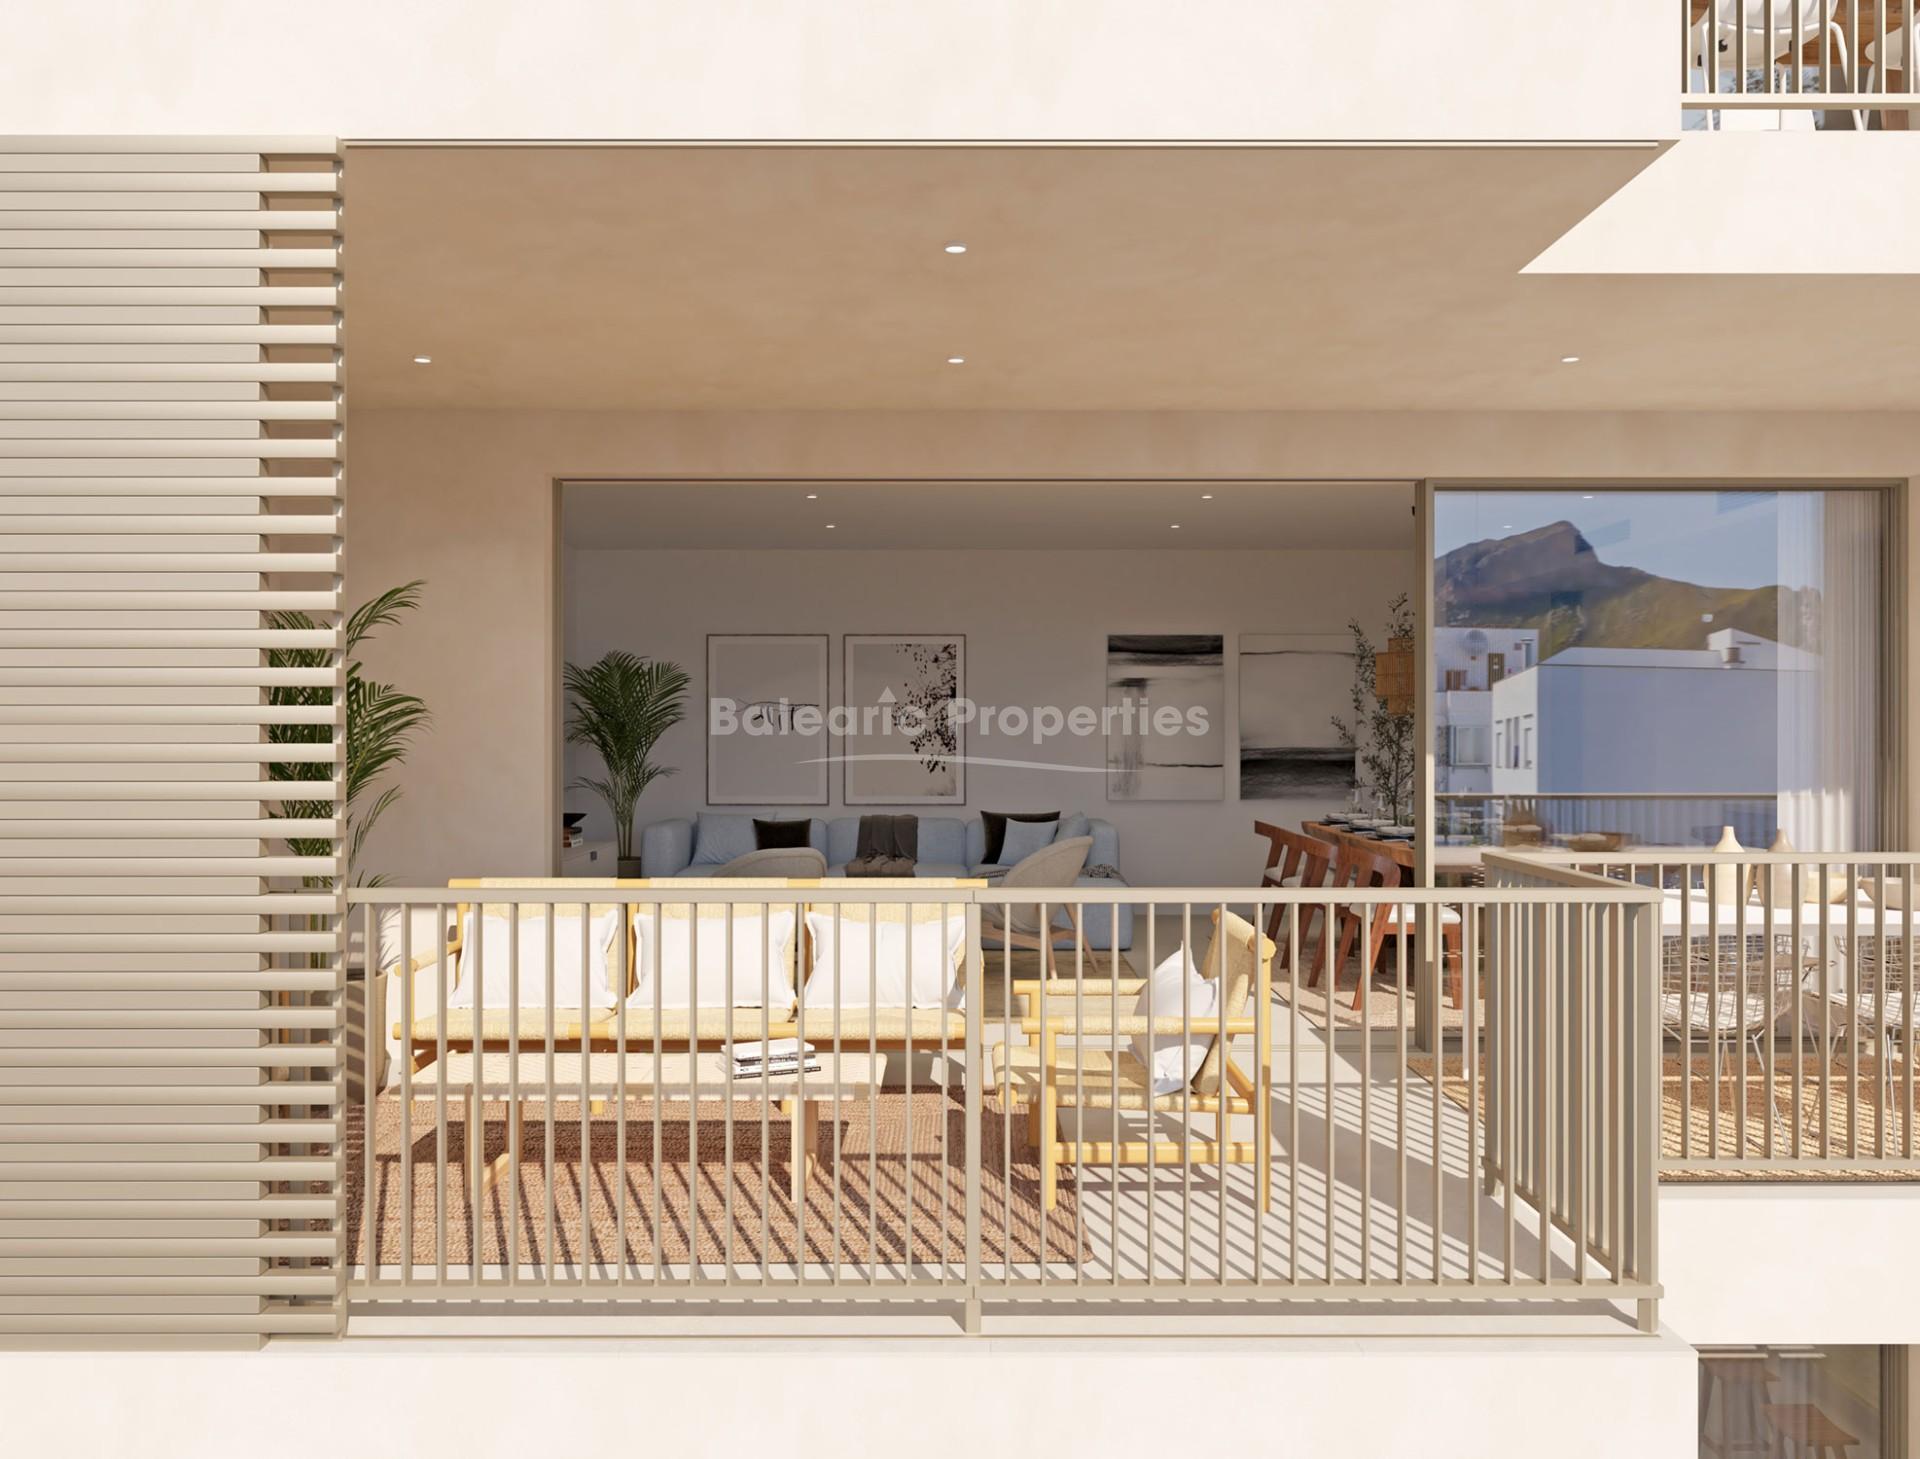 Brand new apartments for sale in Puerto Pollensa, Mallorca